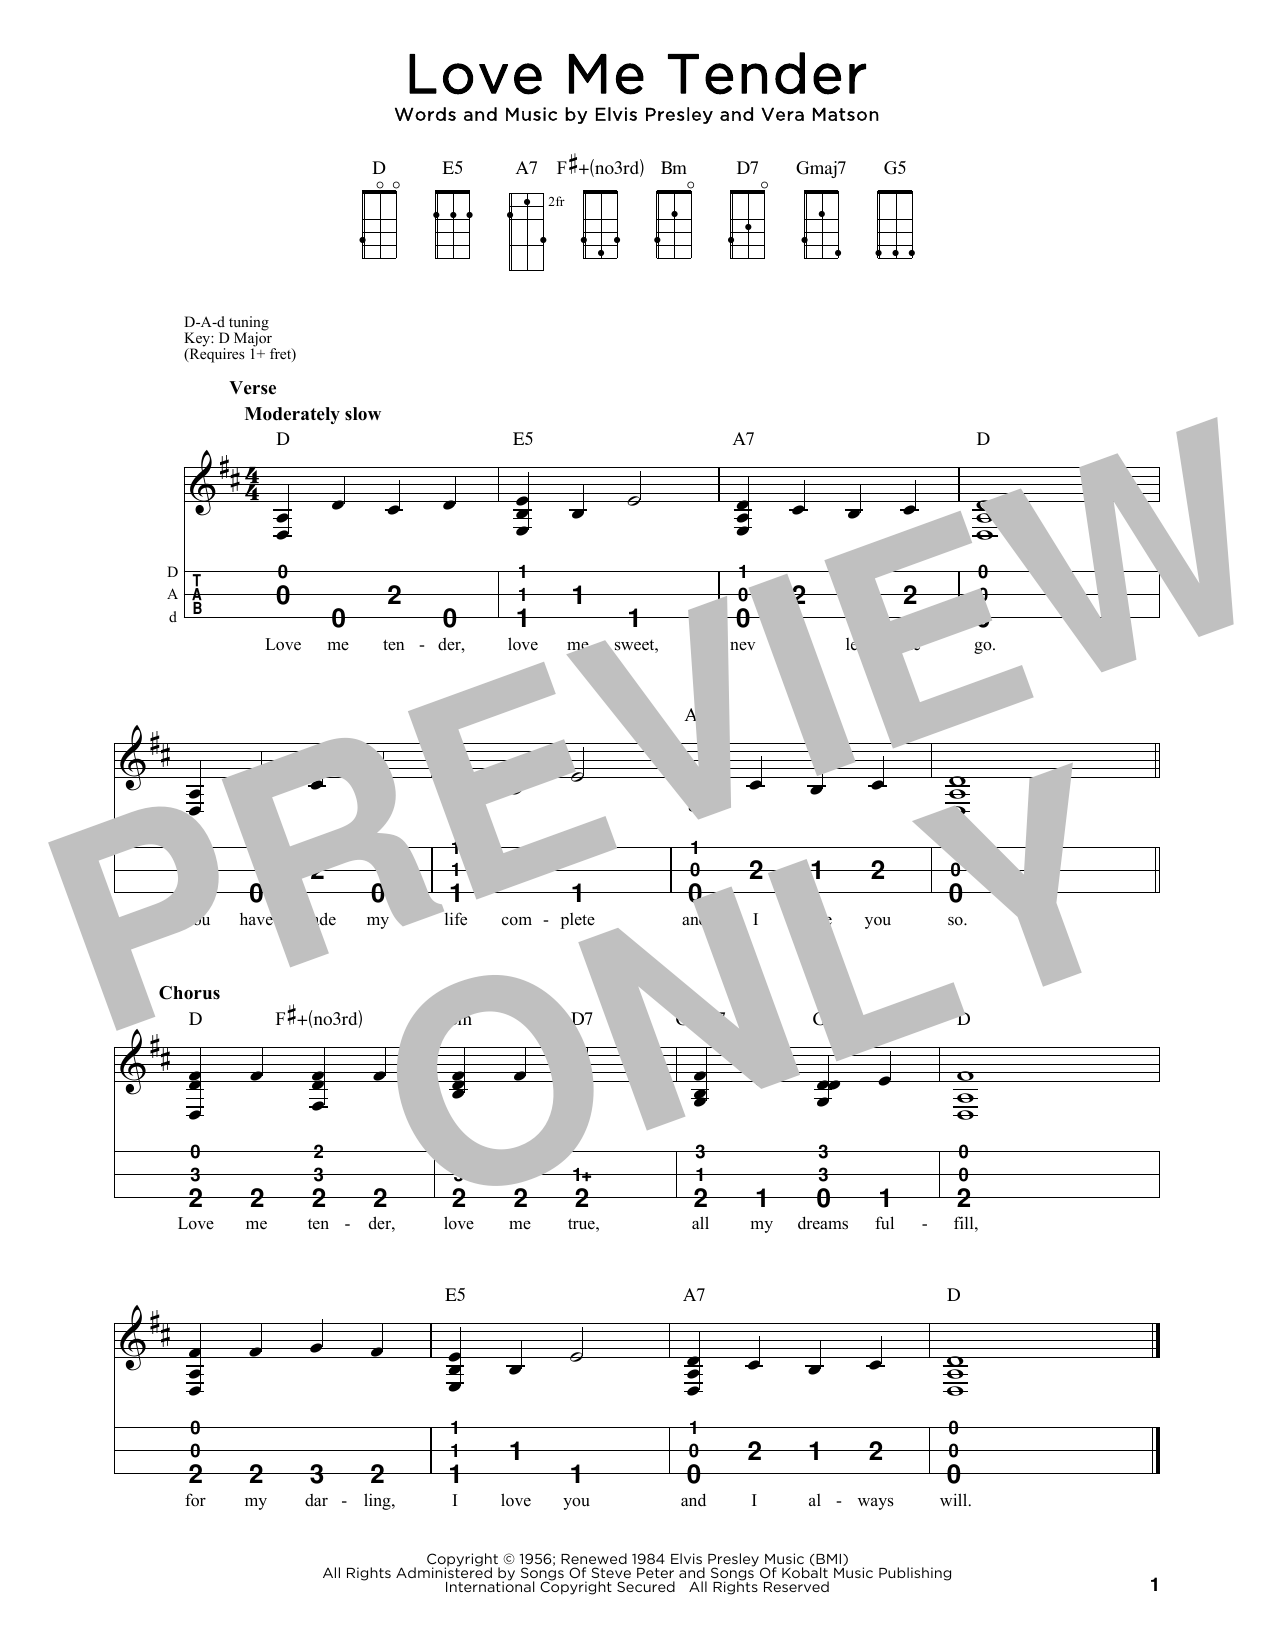 Download Elvis Presley Love Me Tender (arr. Steven B. Eulberg) Sheet Music and learn how to play Dulcimer PDF digital score in minutes